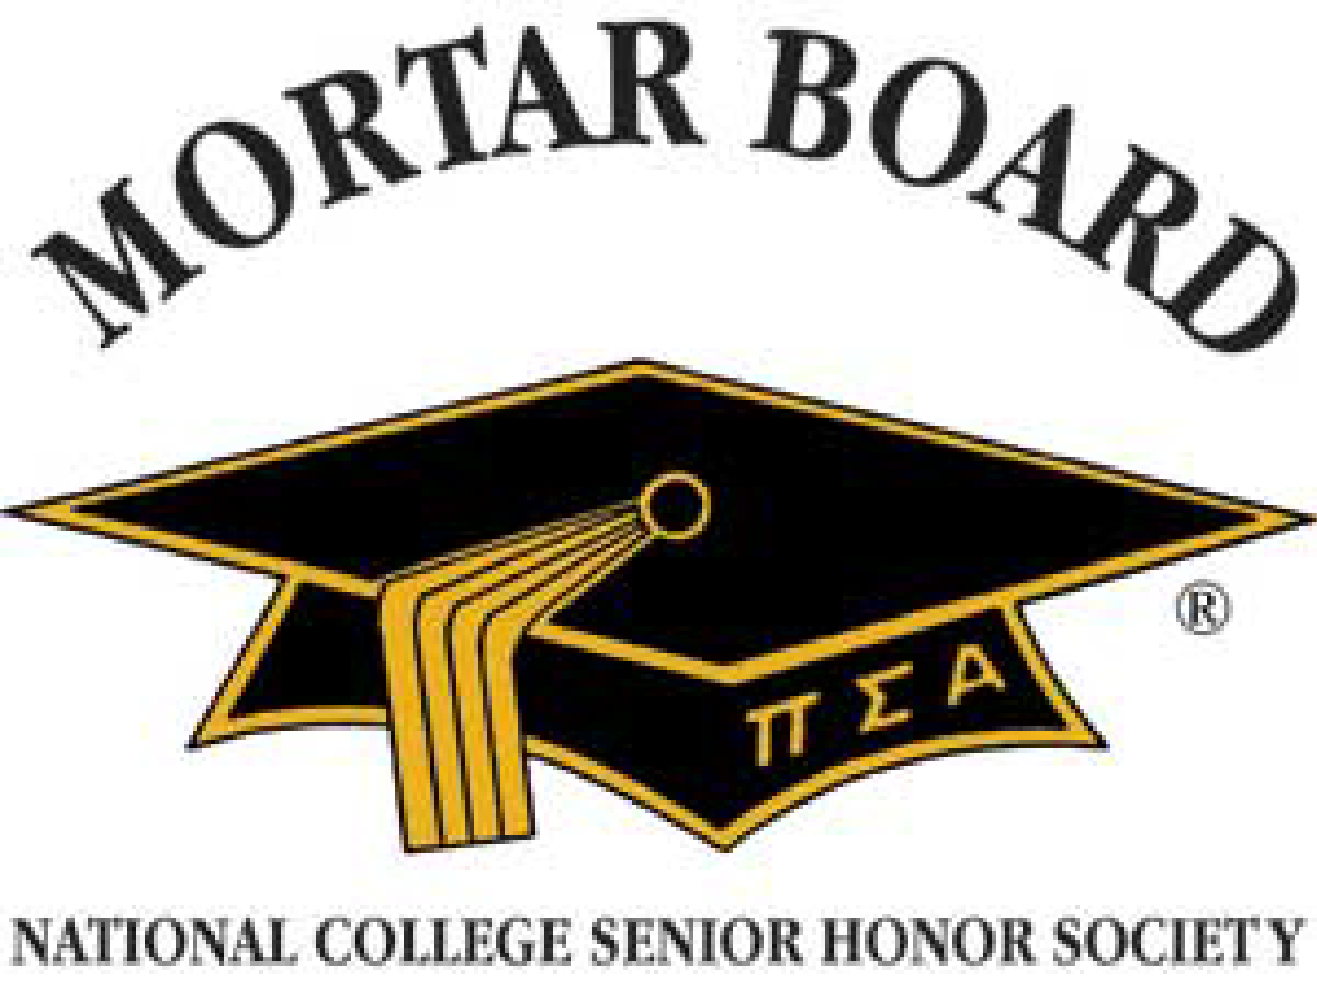 Mortar Board, National College Senior Honor Society banner